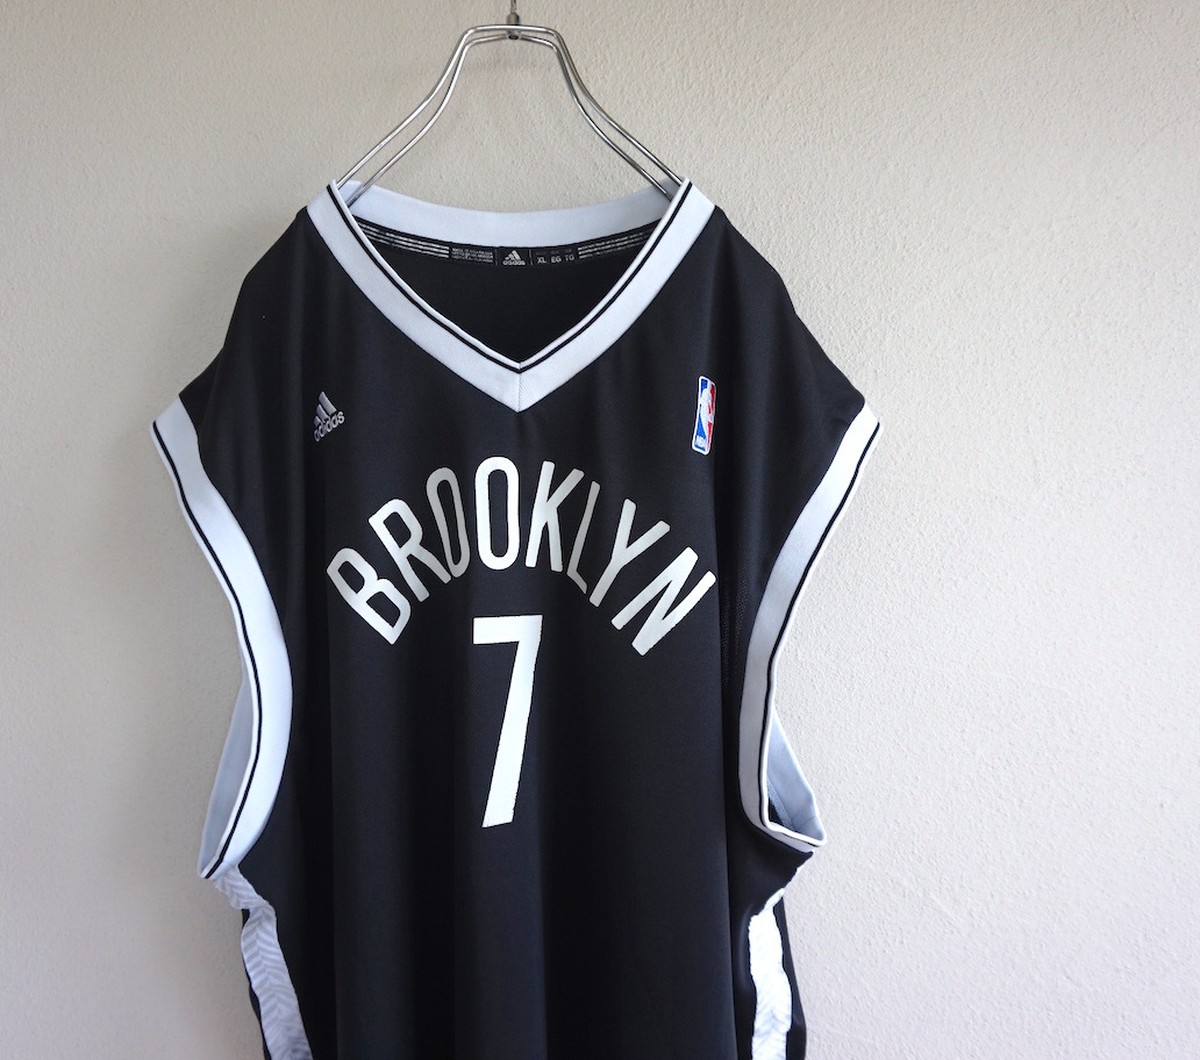 Adidas Nba Brooklyn Nets レプリカユニフォーム ブラック 表記 Xl アディダス ブルックリンネッツ バスケットボール Magnolia Webstore